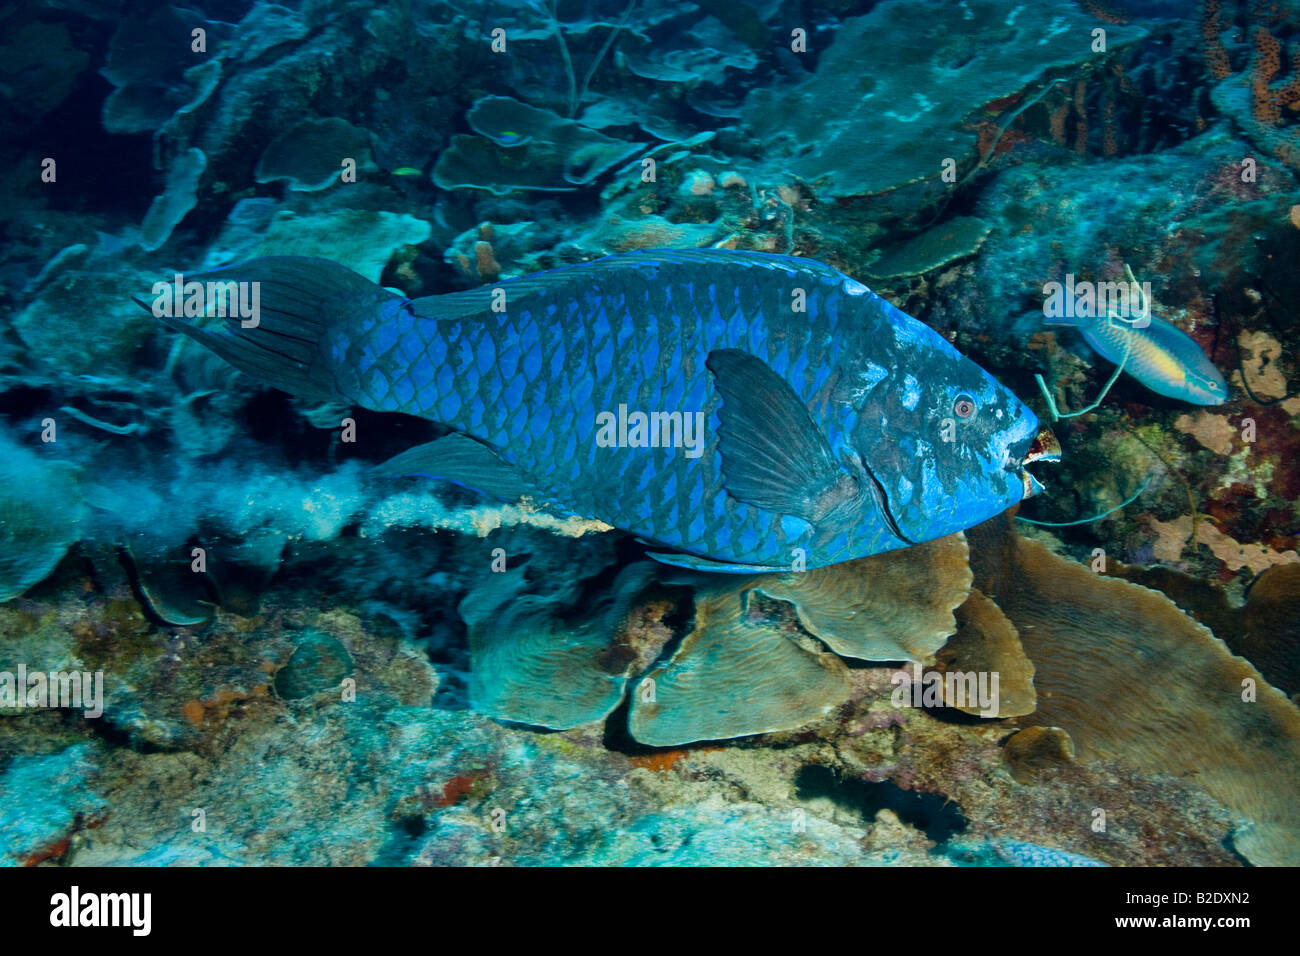 The blue parrotfish, Scarus coeruleus, can reach four feet in length. Bonaire, Caribbean. Stock Photo